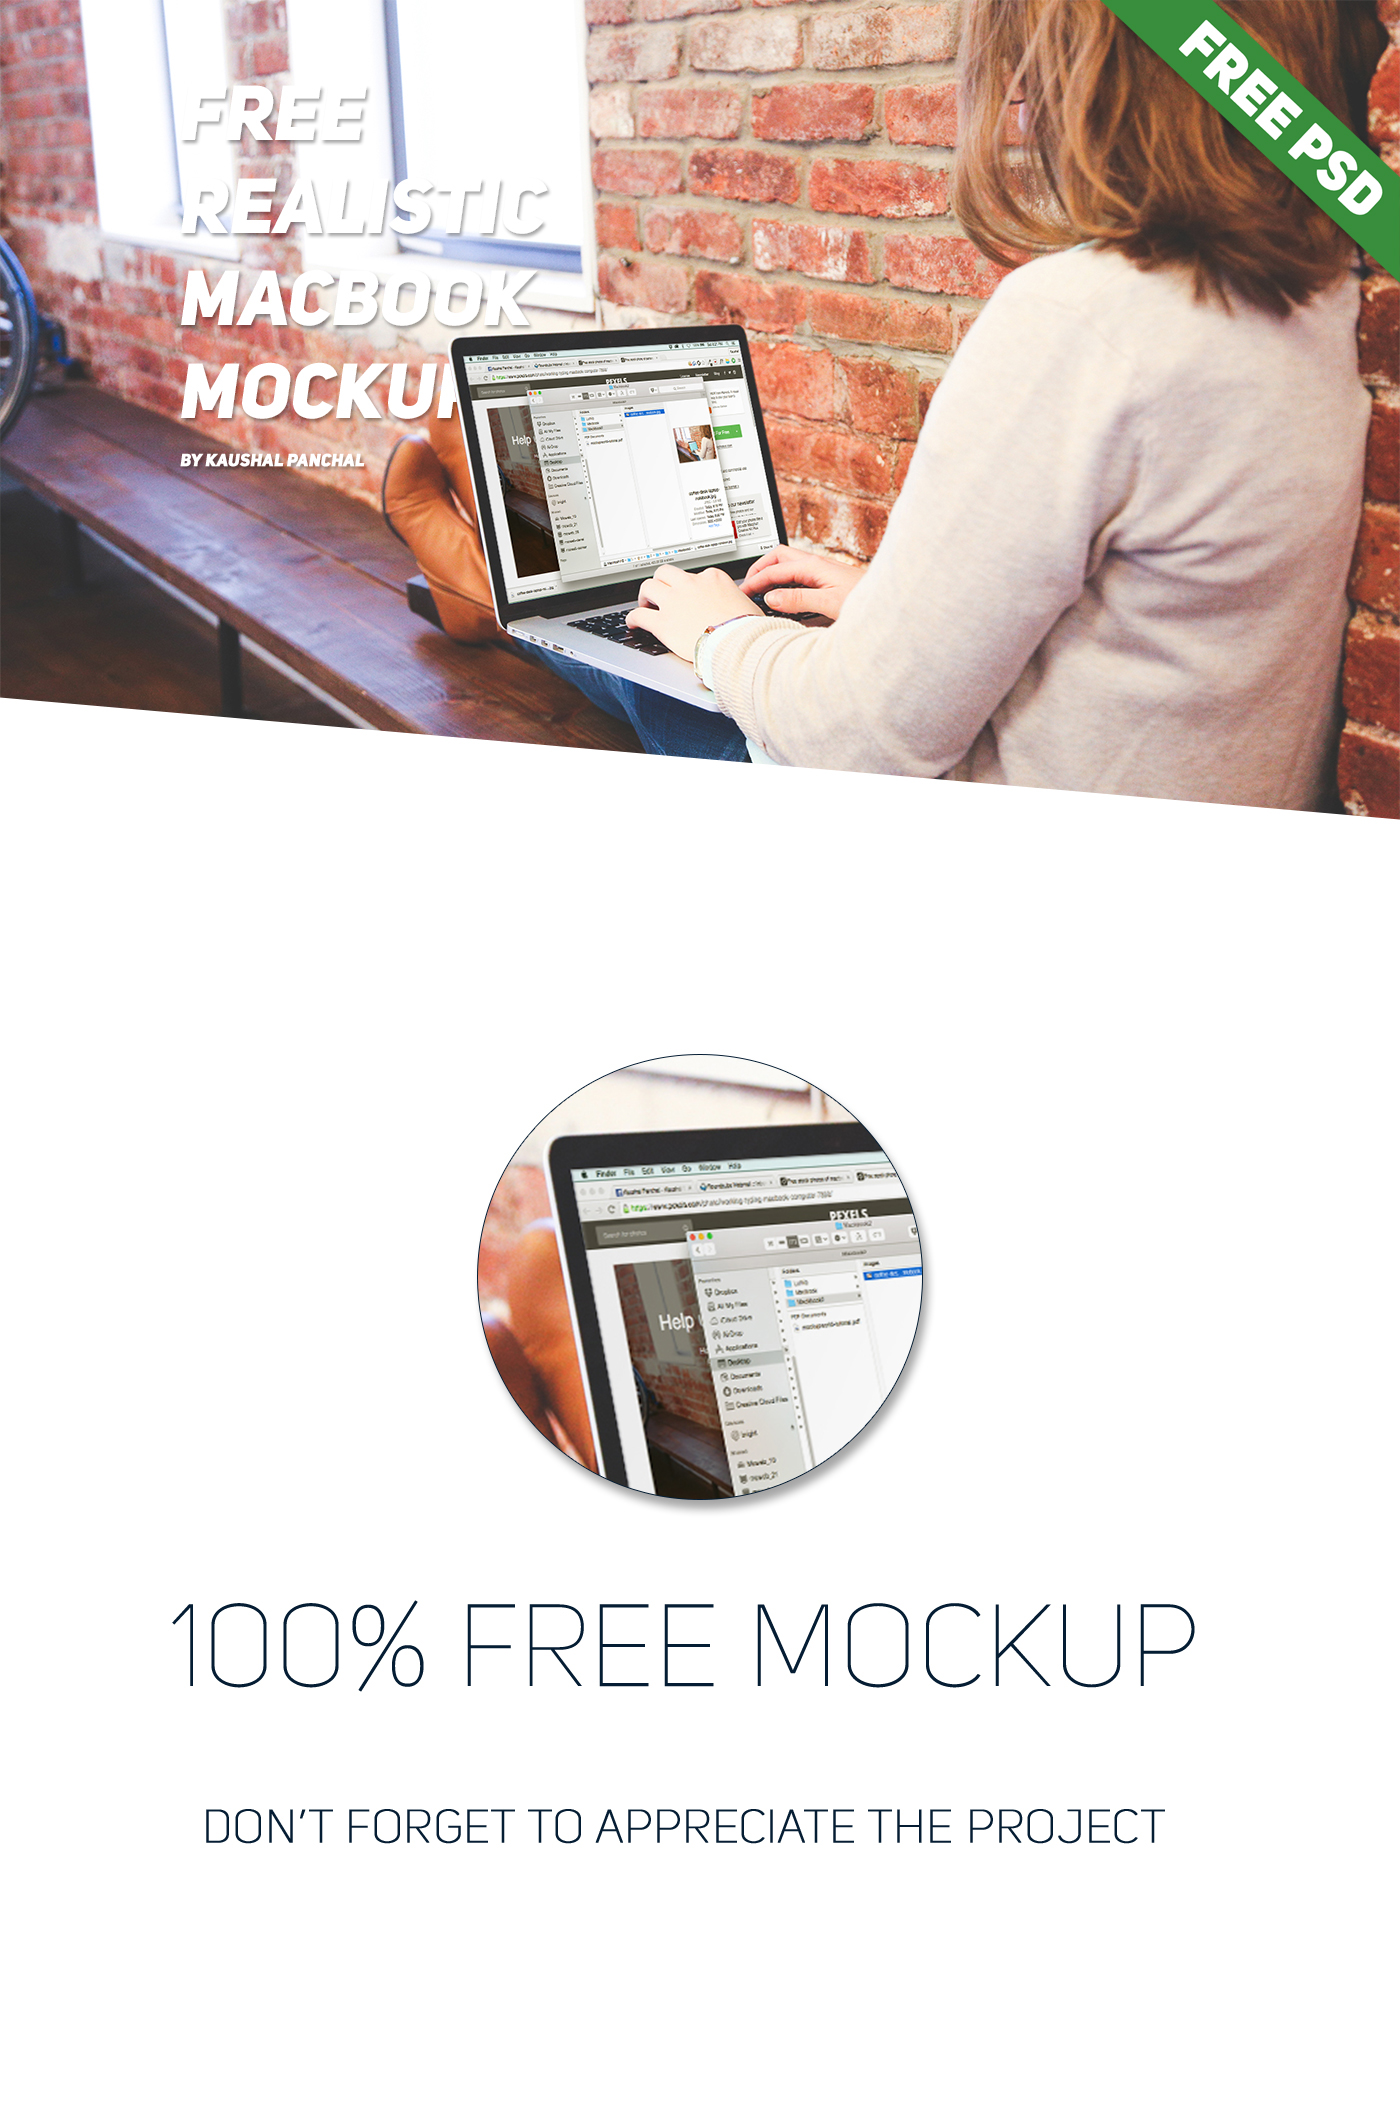 macbook mockup psd mockup free psd Free Mockups